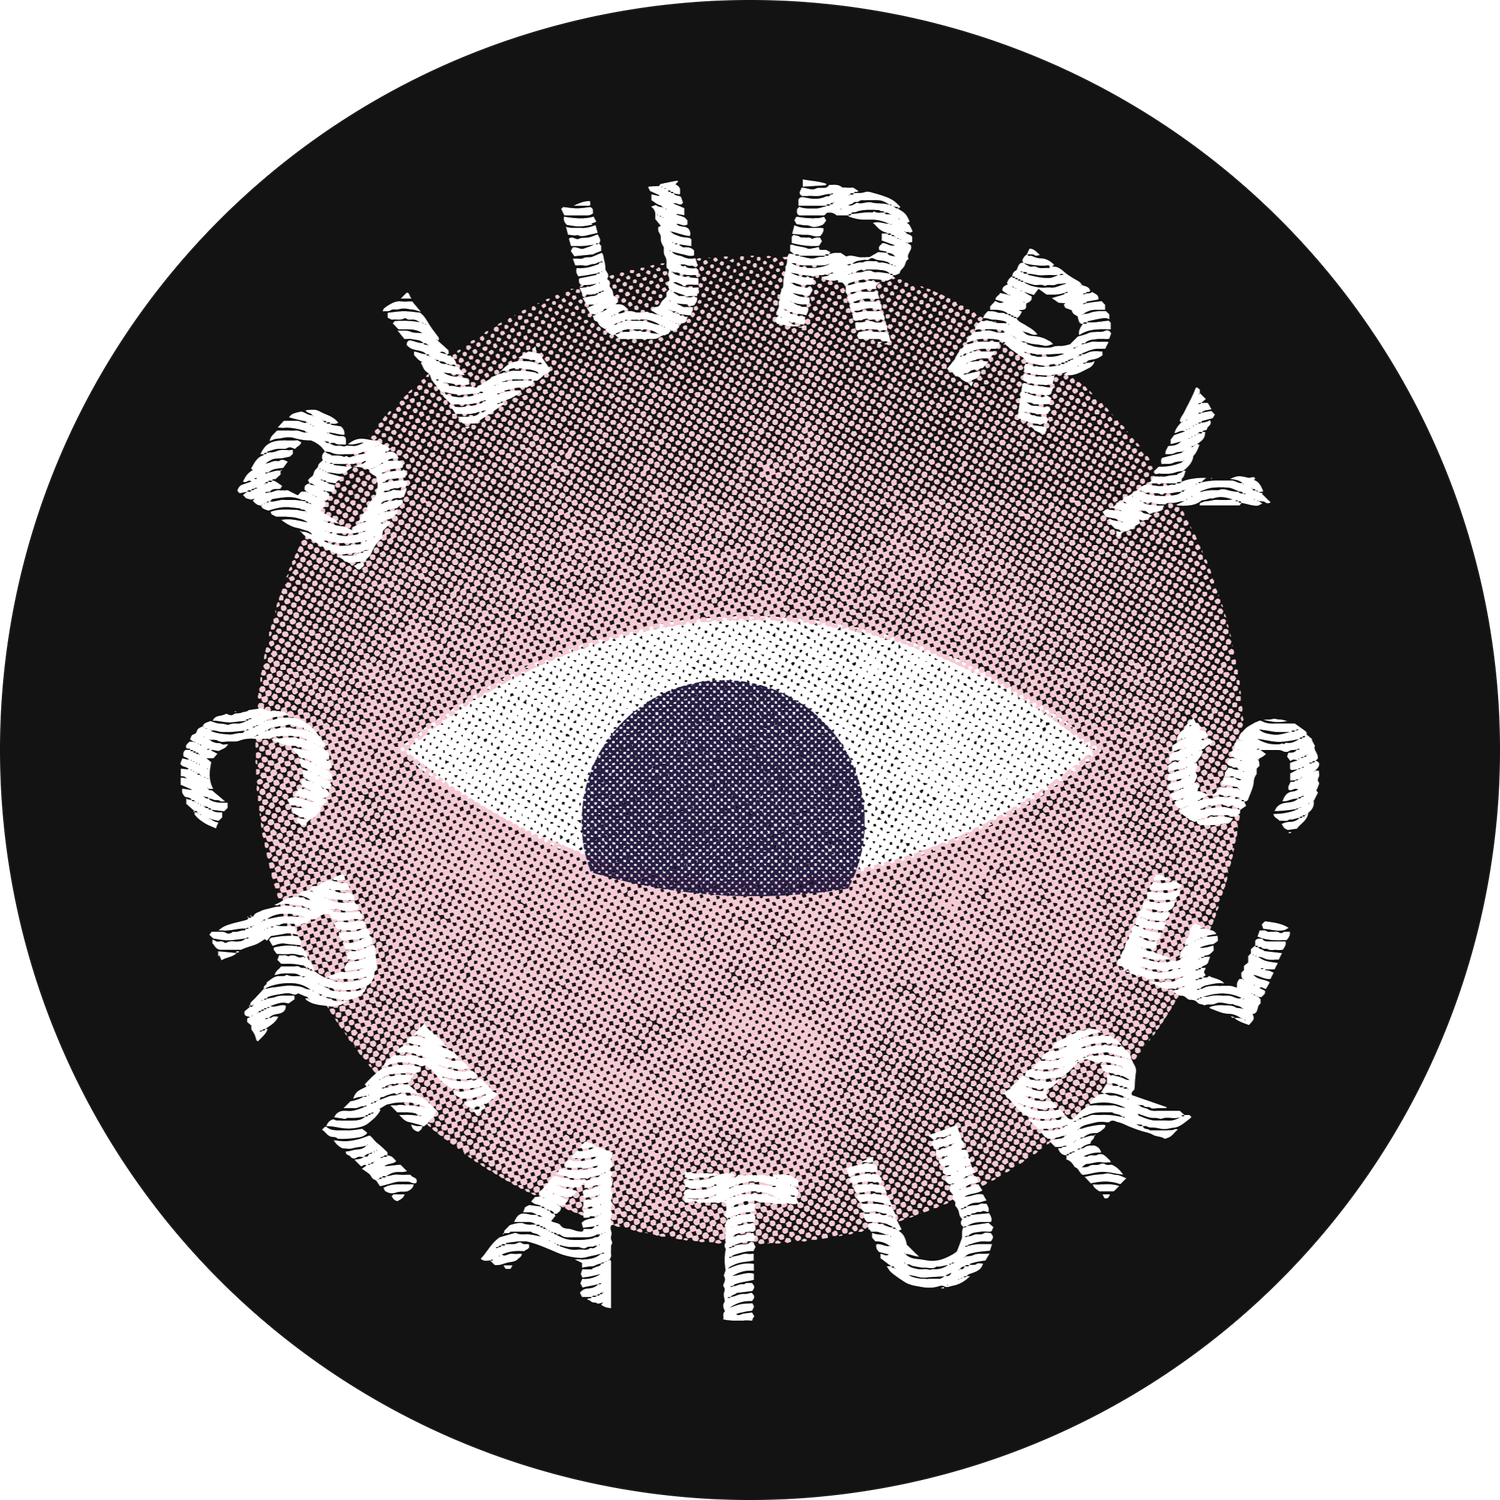 Blurry Creatures